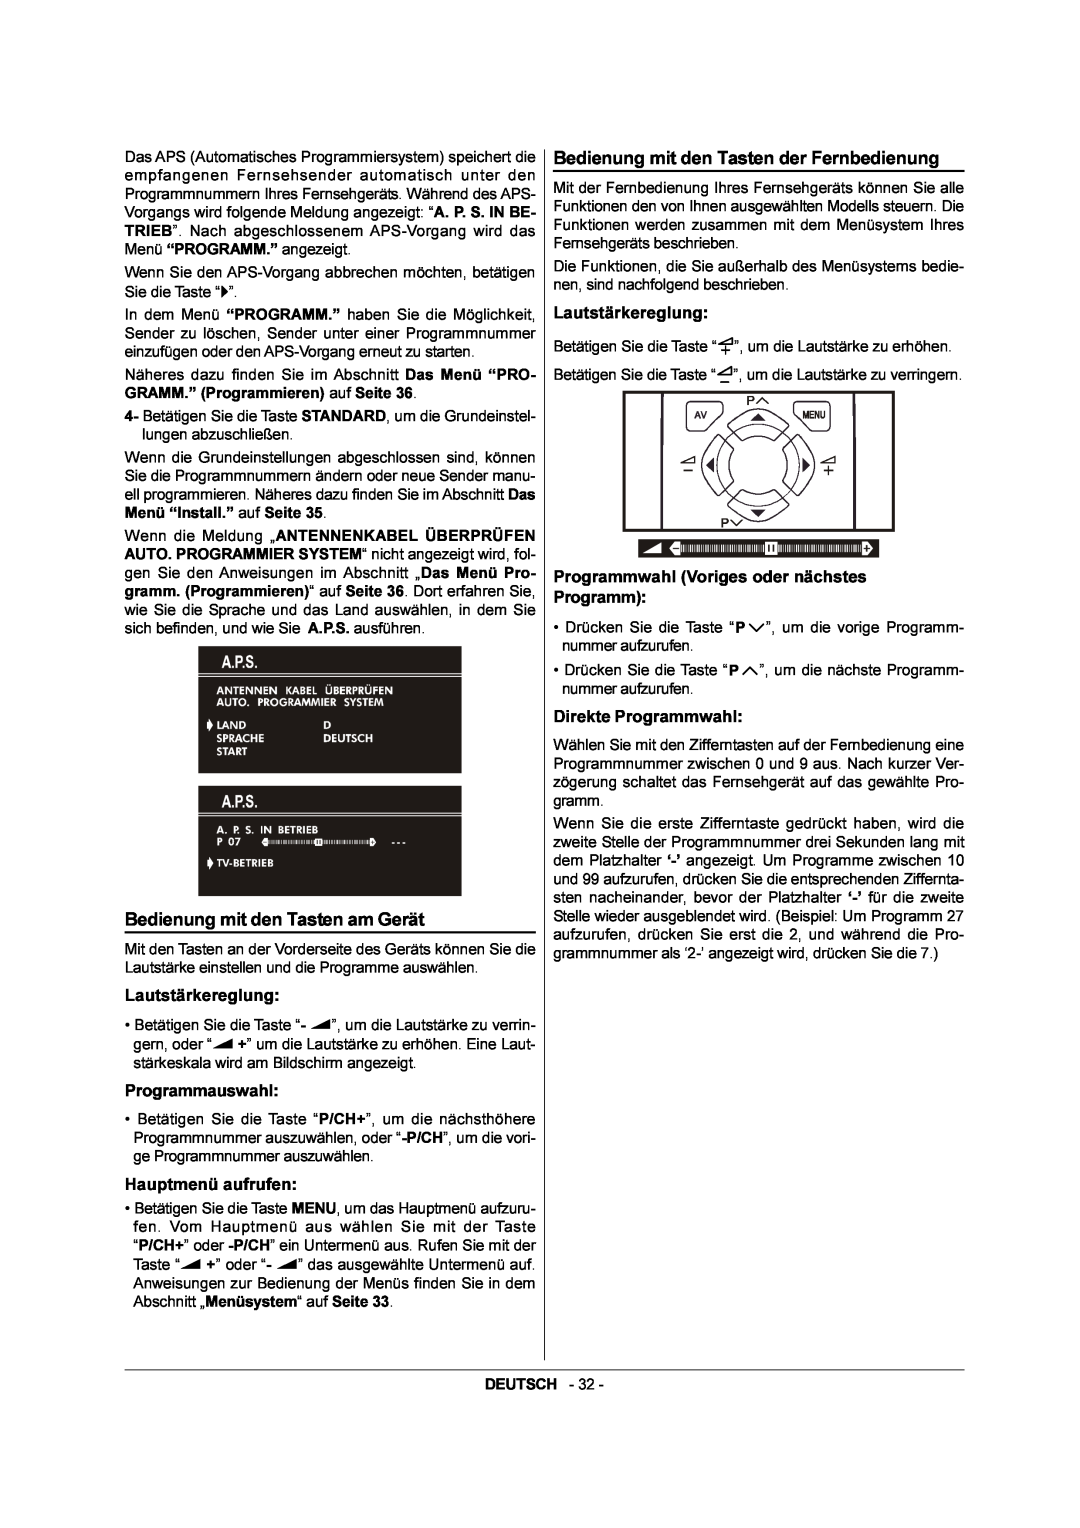 JVC AV-21QS5SN manual Lautstärkereglung, Programmwahl Voriges oder nächstes, Direkte Programmwahl, Programmauswahl 